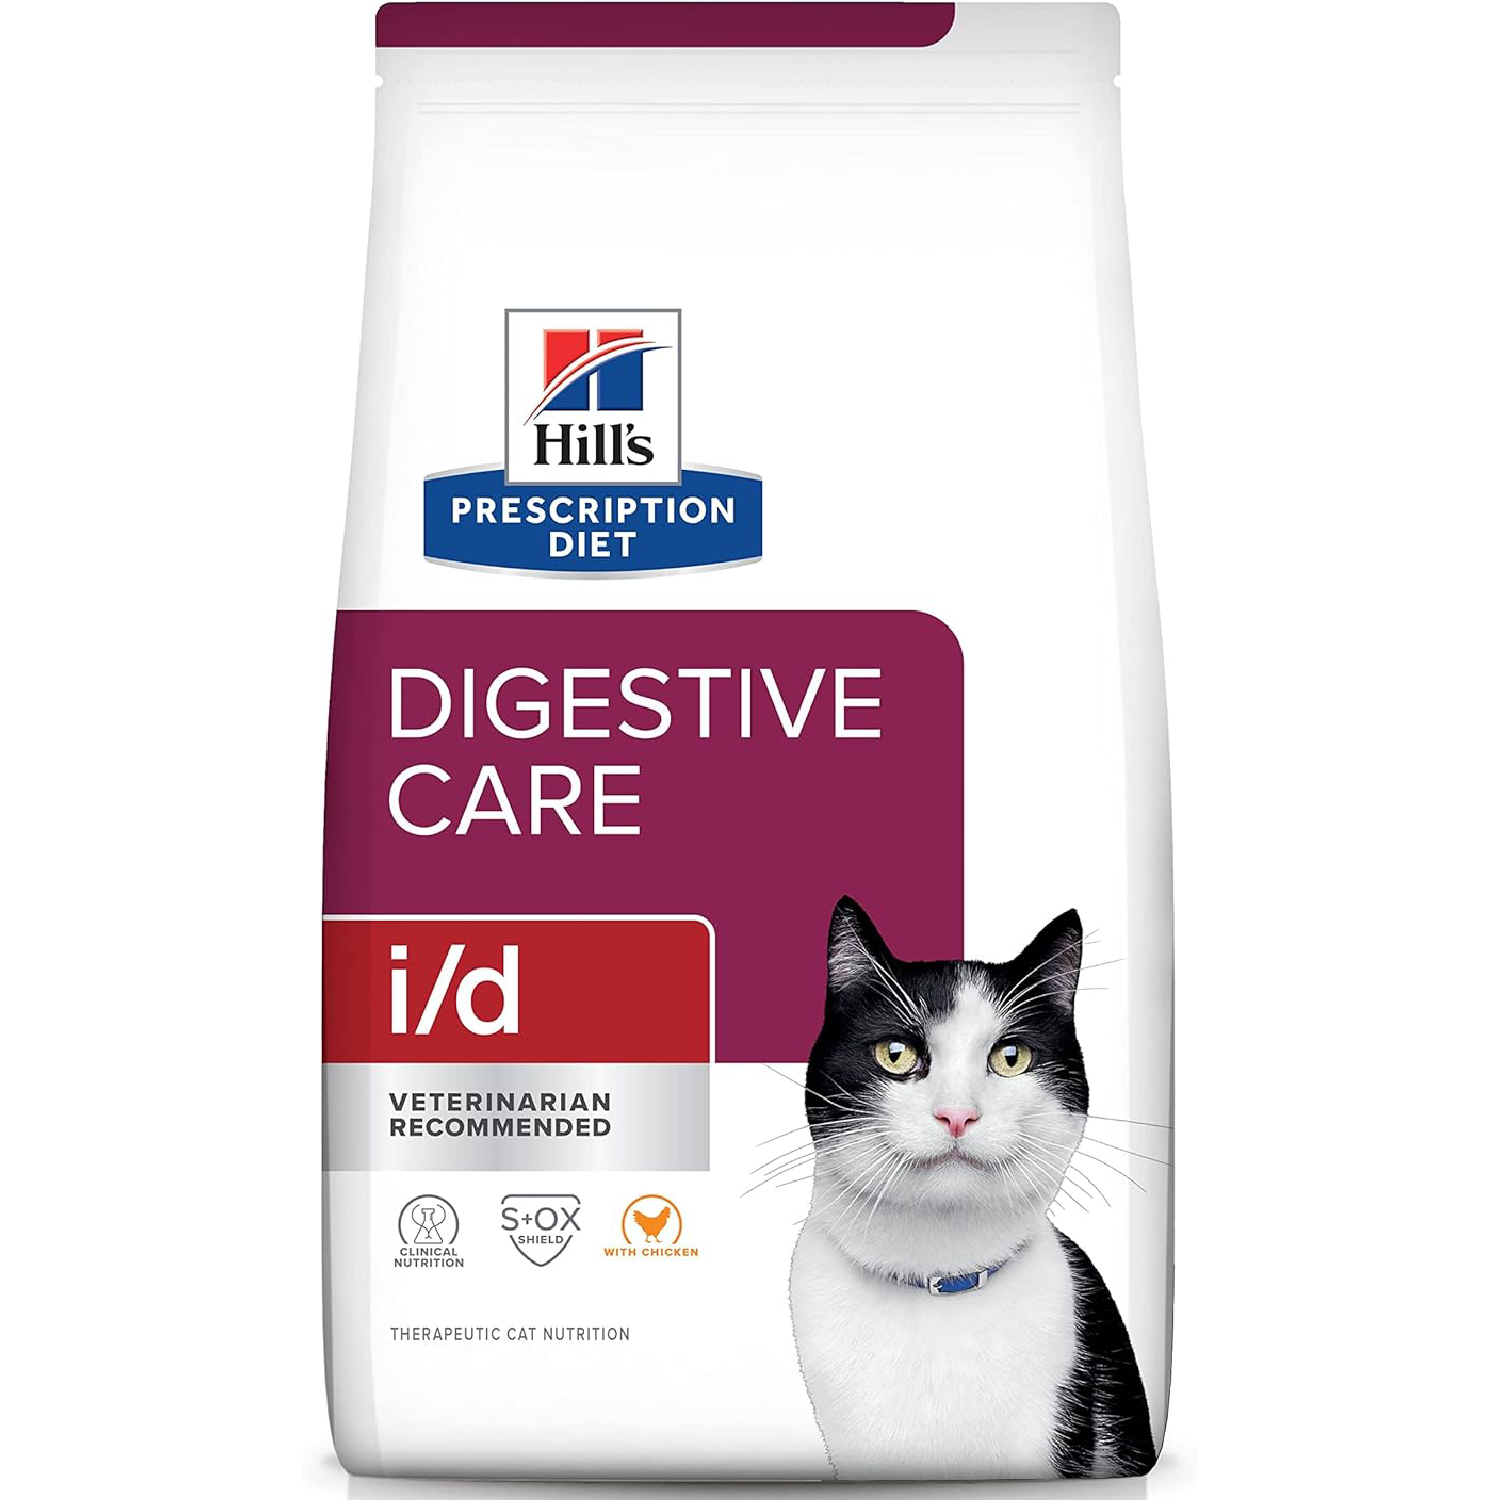 Hill’s Prescription Diet Digestive Care Dry Cat Food